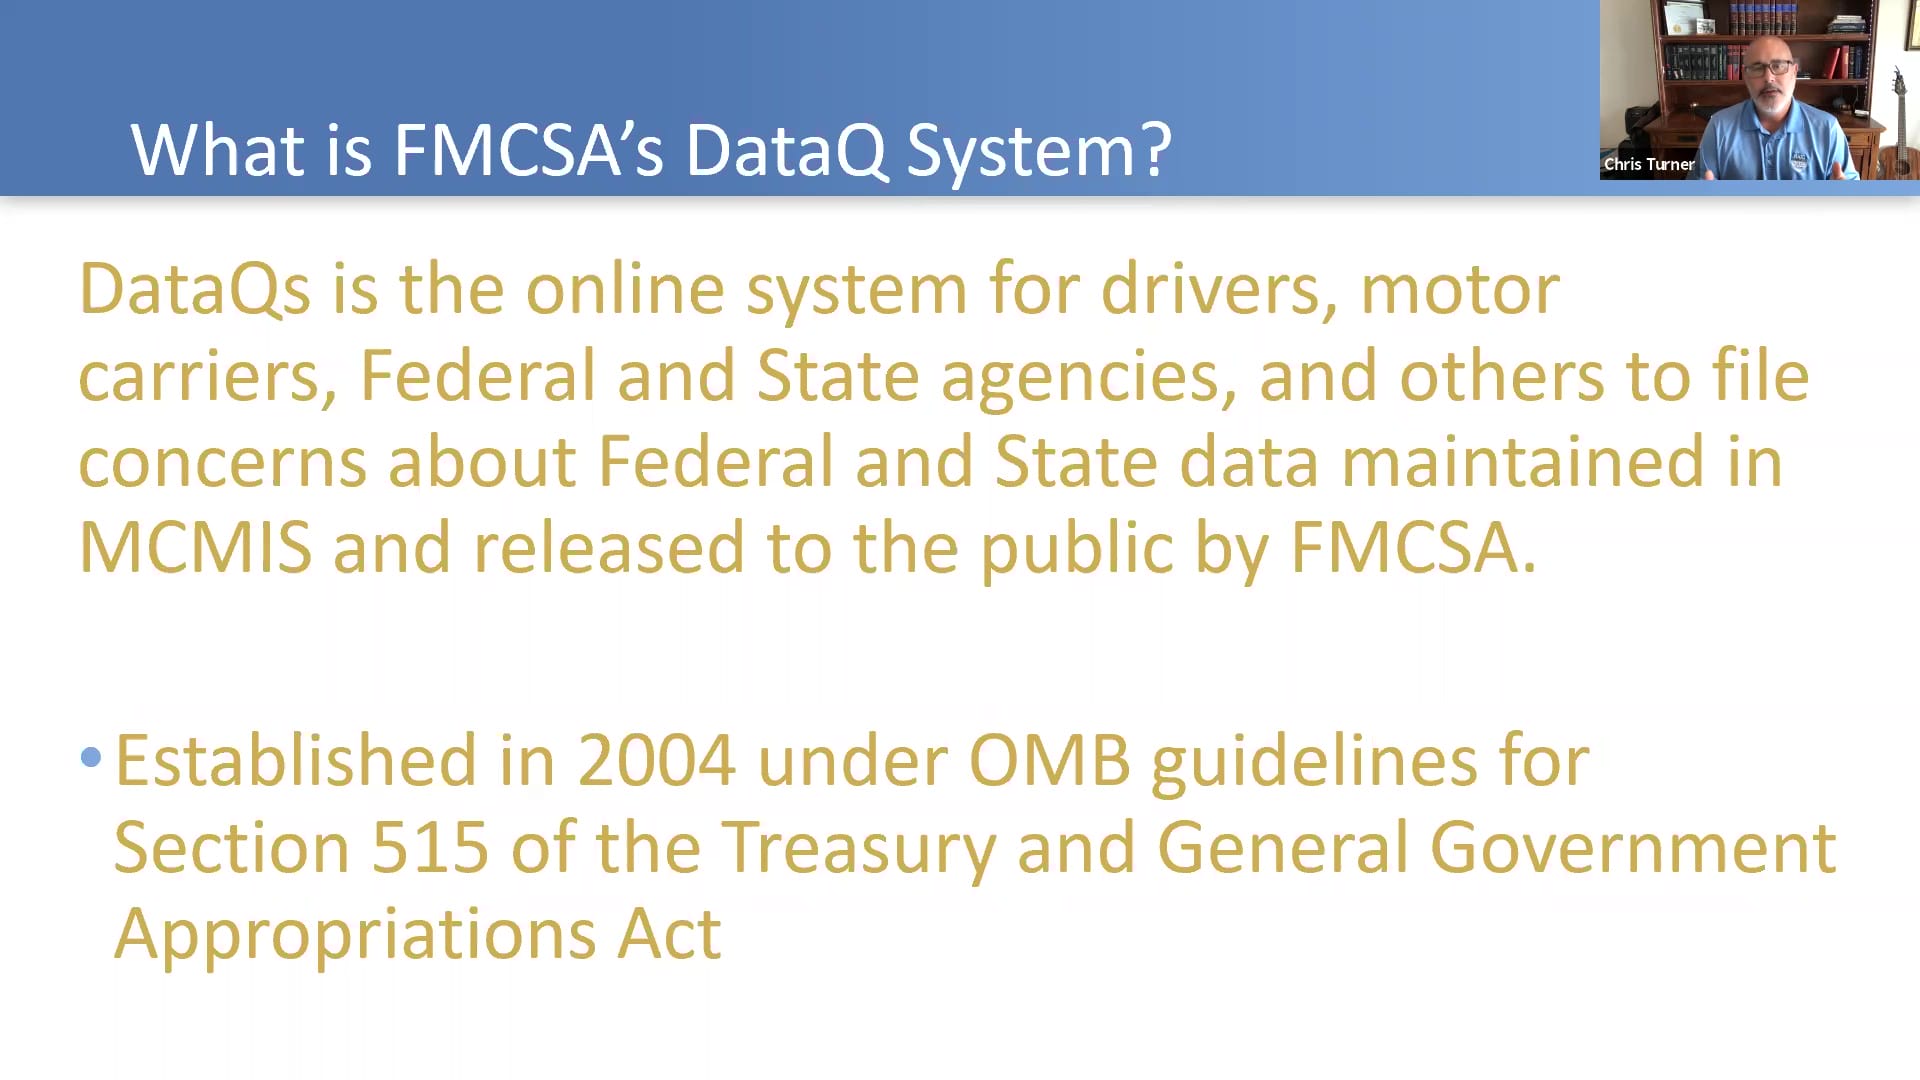 FMCSA DataQ System